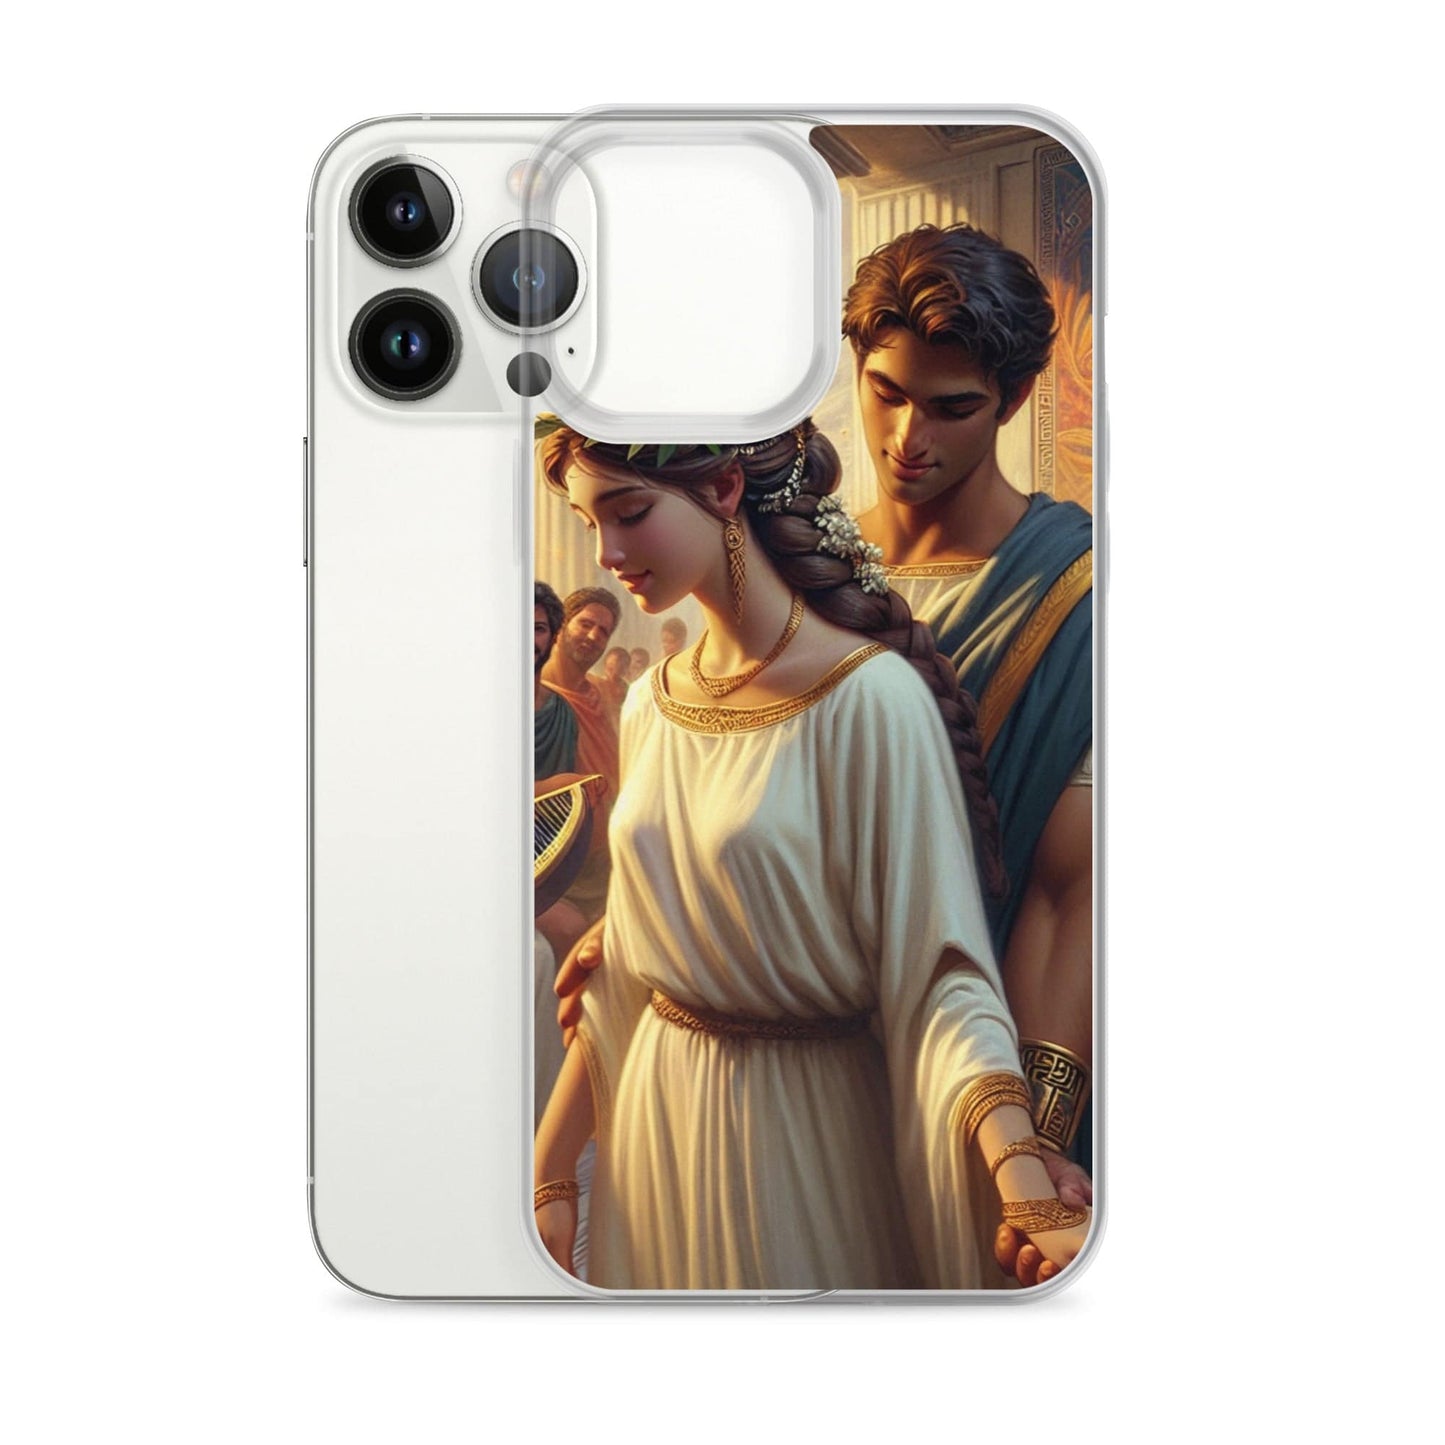 Greek Romance IPhone Case